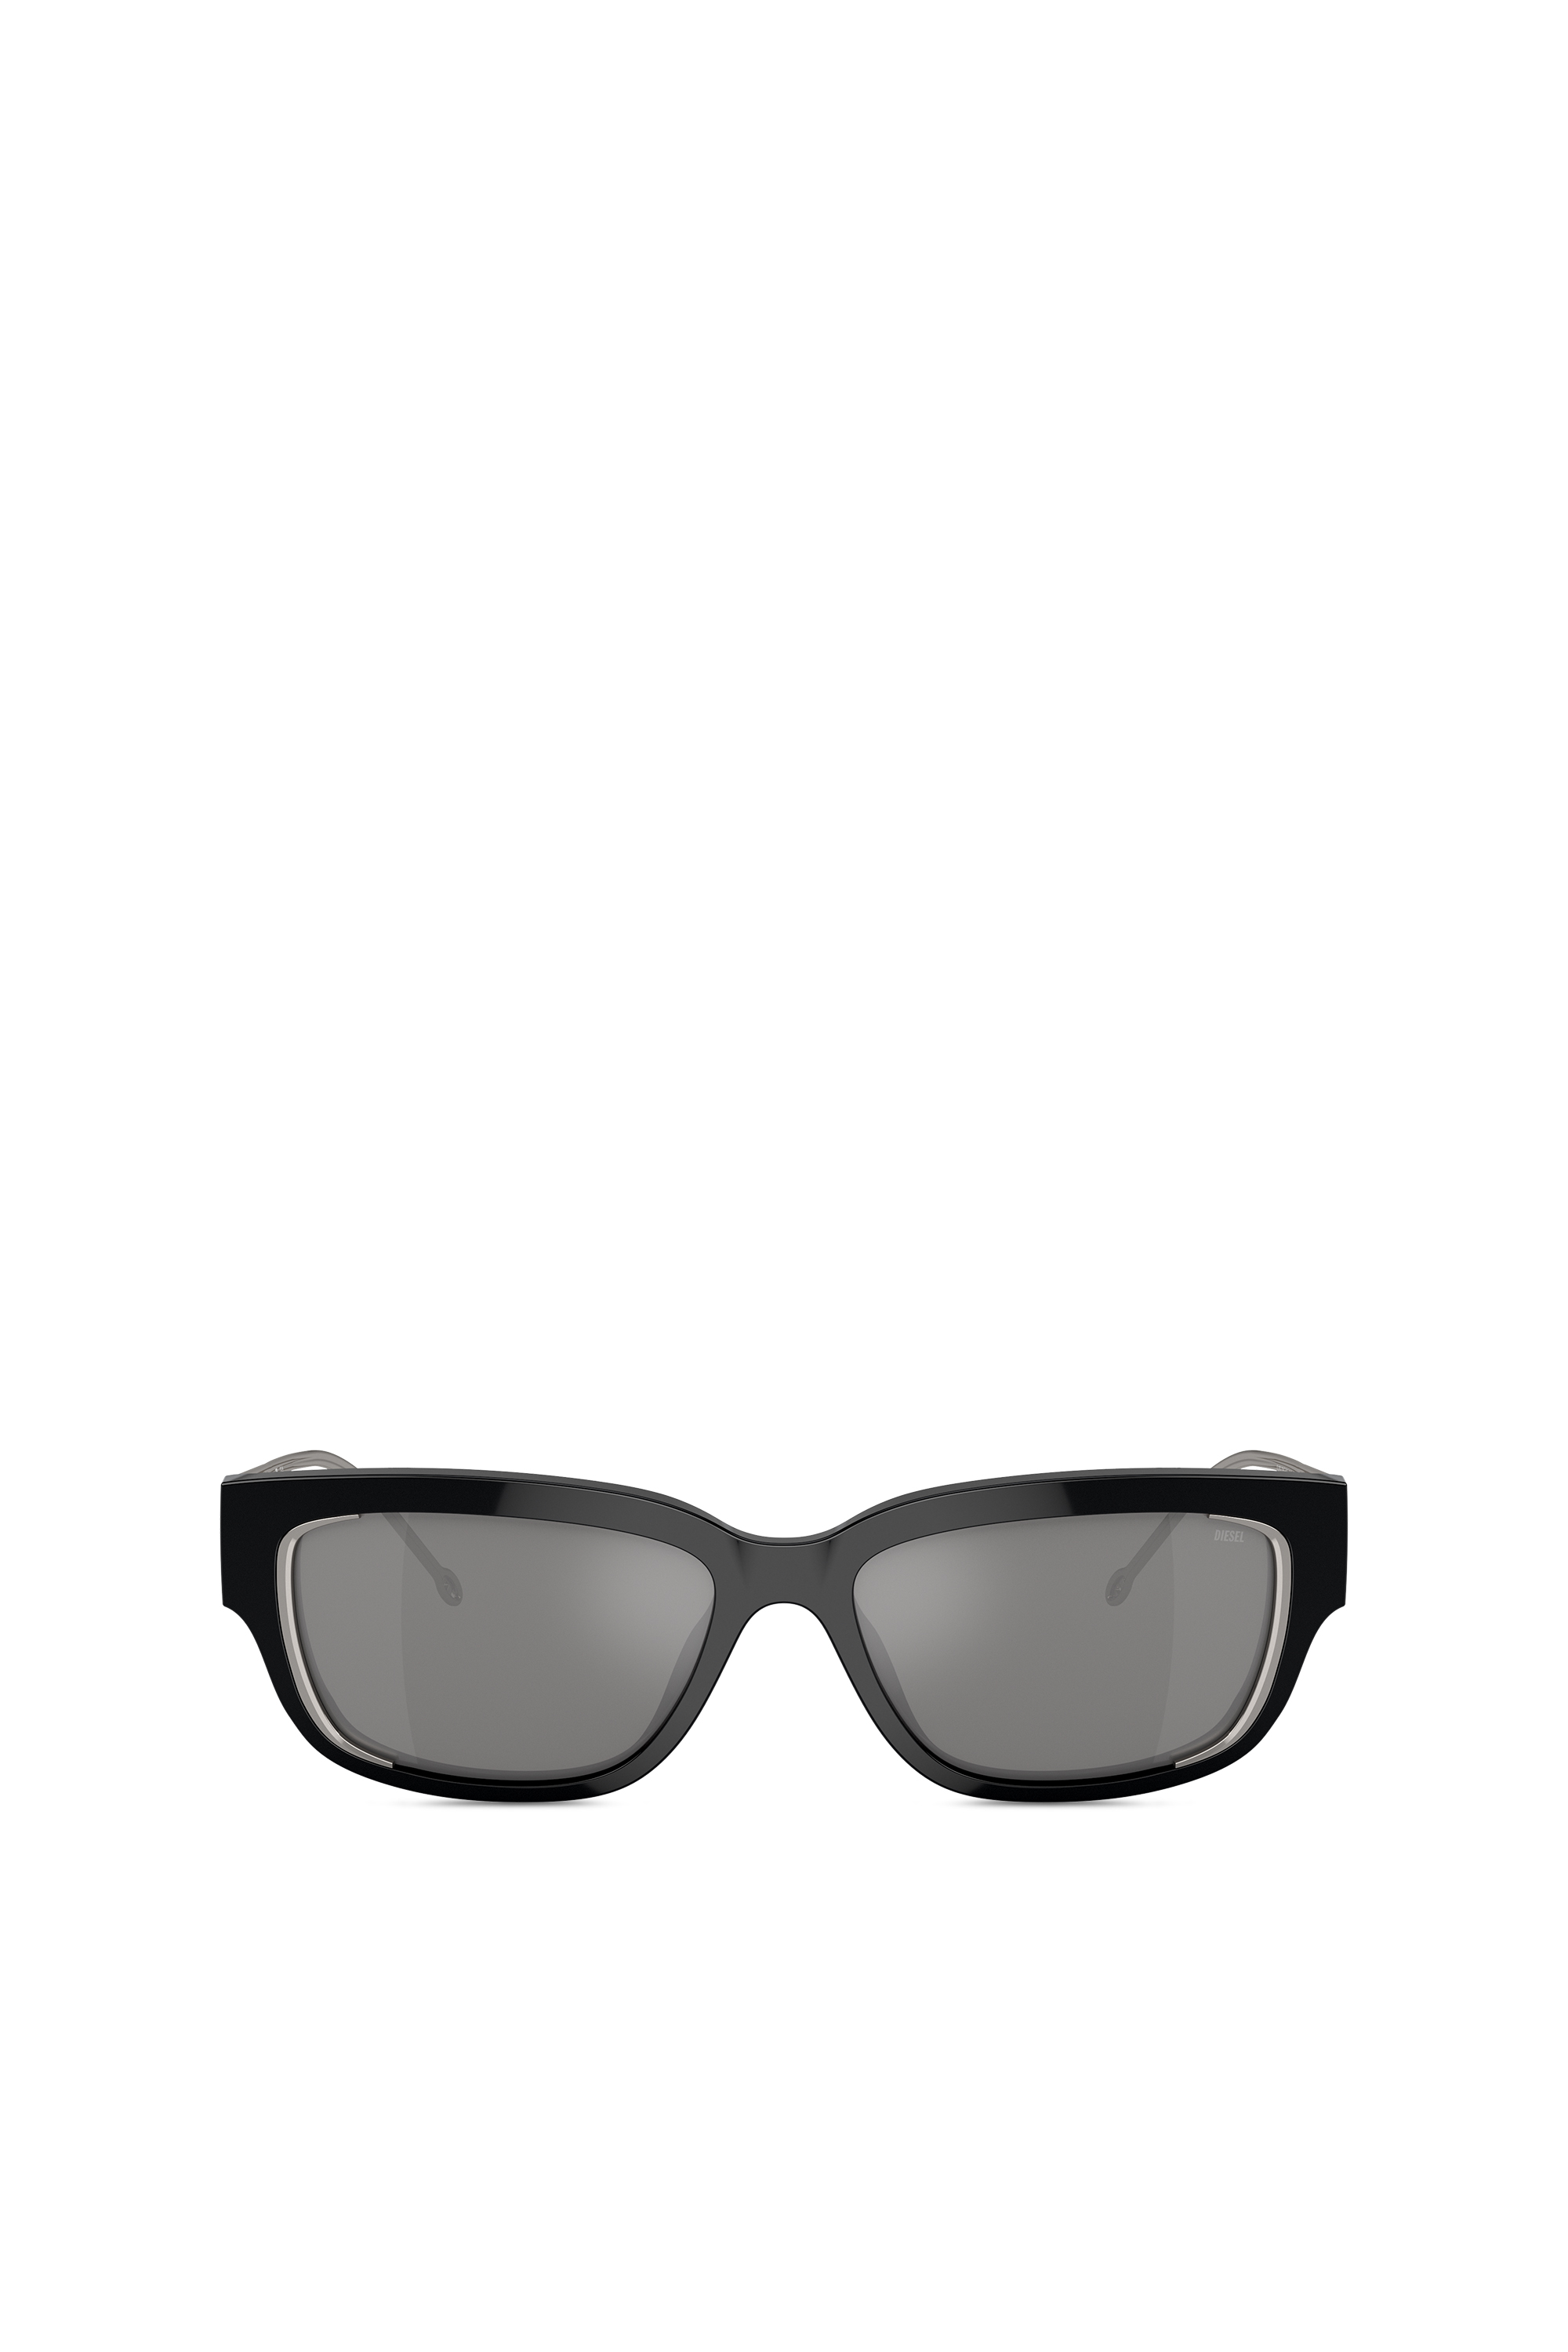 Diesel - Everyday style sunglasses - Sunglasses - Unisex - Multicolor